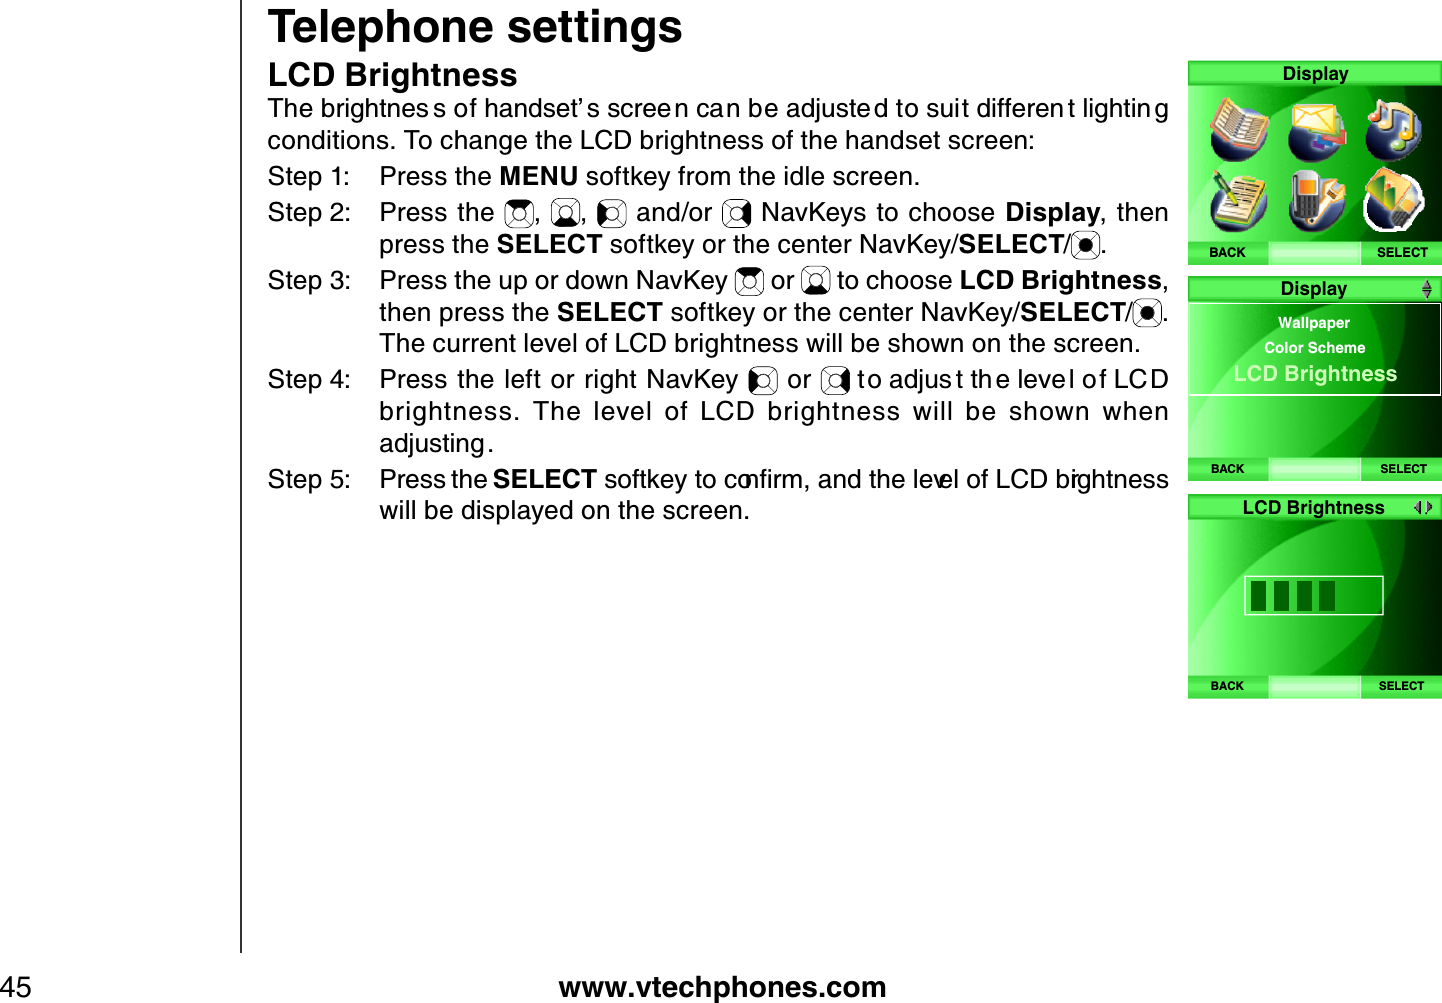 www.vtechphones.com45Telephone settingsLCD Brightness6JGDTKIJVPGU UQHJCPFUGVŏ UUETGG PECPDGCFLWUVG FVQUWKVFKHHGTGP VNKIJVKP Iconditions. To change the LCD brightness of the handset screen:Step 1: Press the MENU softkey from the idle screen.Step 2: Press the  , ,  and/or   NavKeys to choose Display, then press the SELECT softkey or the center NavKey/SELECT/.Step 3: Press the up or down NavKey   or   to choose LCD Brightness,then press the SELECT softkey or the center NavKey/SELECT/.The current level of LCD brightness will be shown on the screen.Step 4: Press the left or right NavKey   or  VQCFLWU VVJ GNGXGNQH.%&amp;brightness.  The  level  of  LCD  brightness  will  be  shown  when CFLWUVKPIStep 5: Press the SELECTUQHVMG[VQEQPſTOCPFVJGNGXGNQH.%&amp;DTKIJVPGUUwill be displayed on the screen.SELECTDisplayBACKBACK SELECTWallpaperColor SchemeLCD Brightness DisplayBACK SELECT LCD Brightness